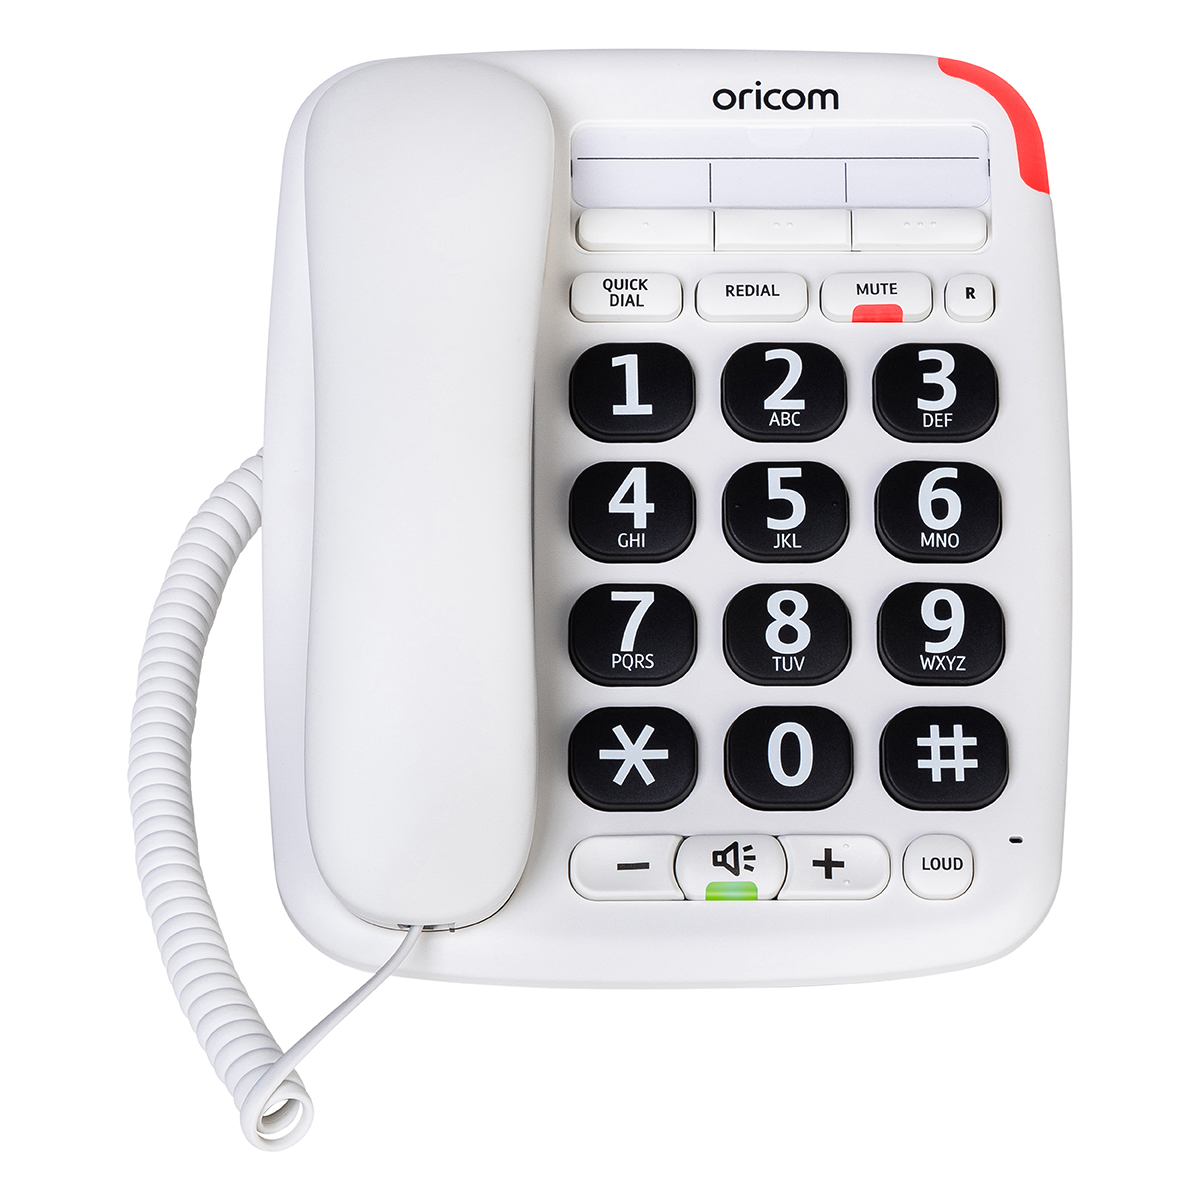 Buy an Oricom CARE95 Big Button Amplified Speakerphone Online in Australia